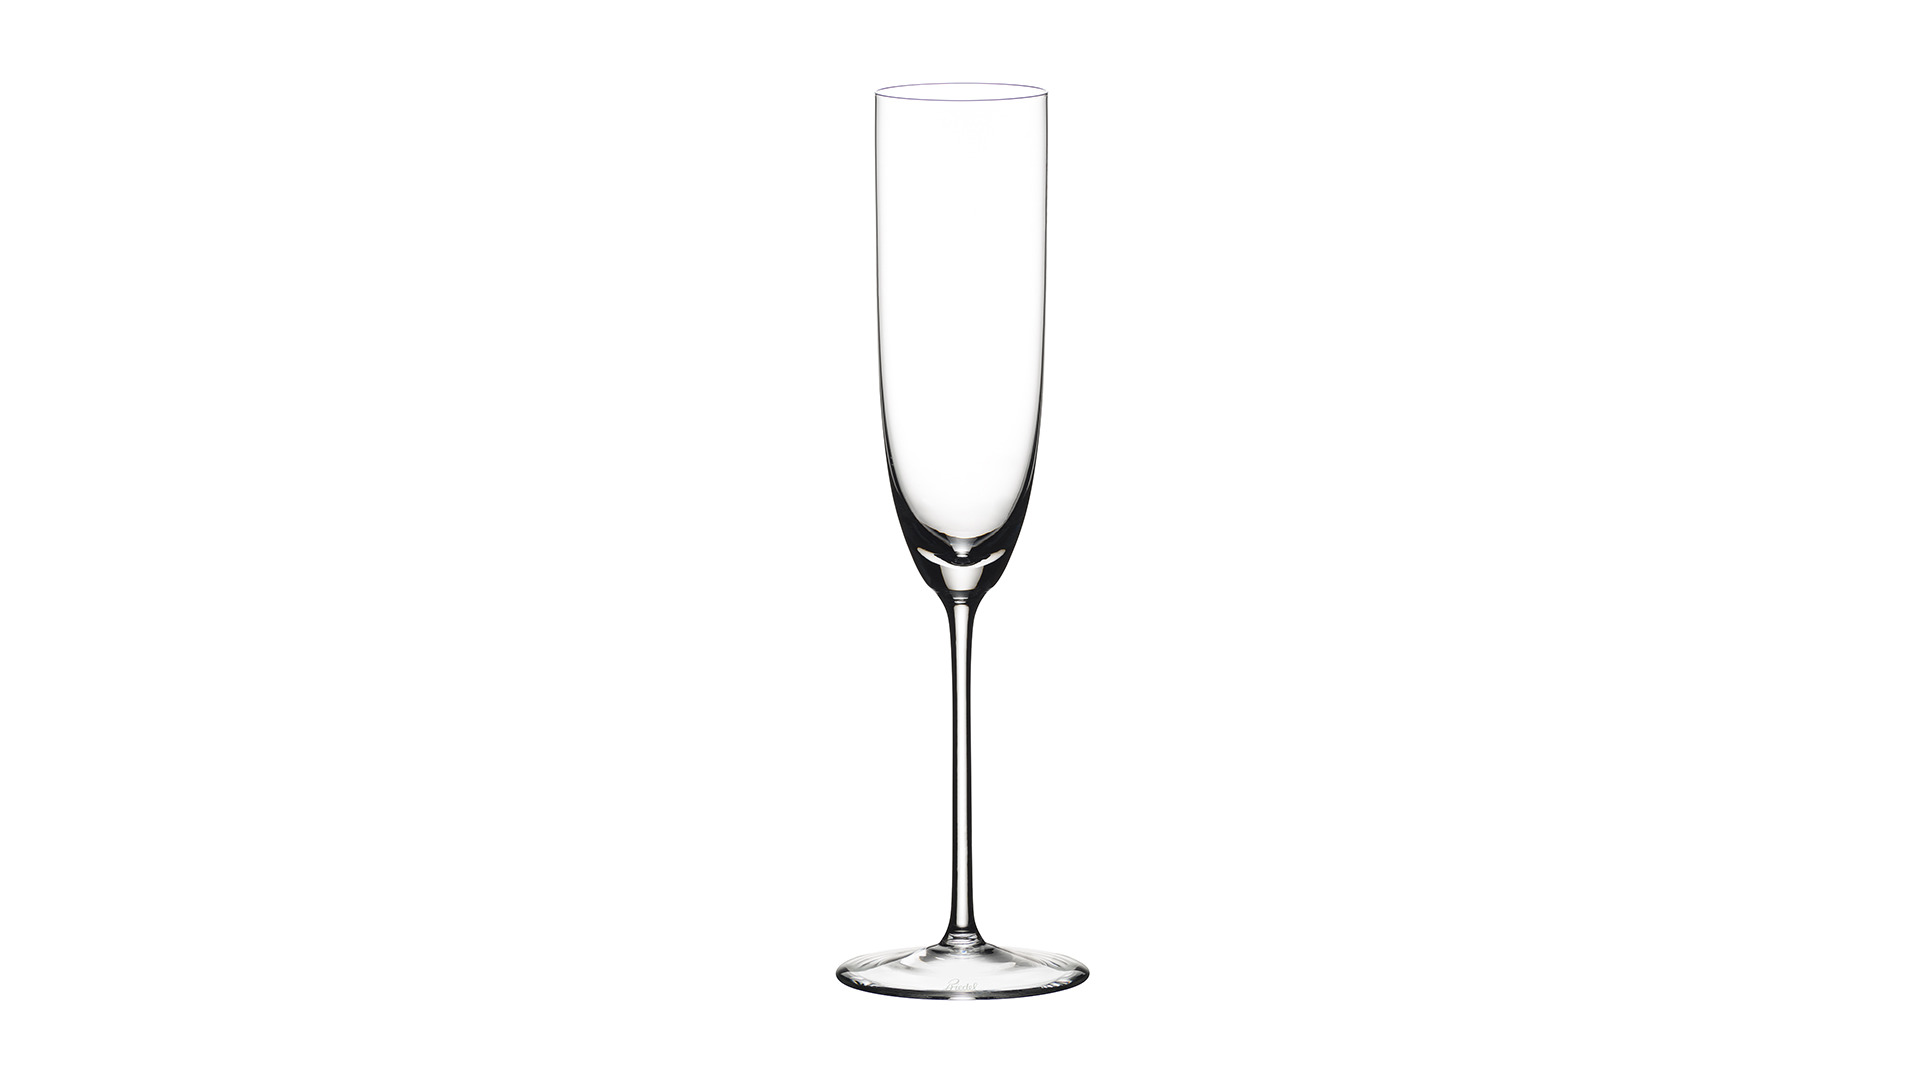 Флюте для шампанского. Riedel бокал для шампанского Sommeliers Champagne Glass 4400/08 170 мл. Riedel бокал для шампанского Superleggero Champagne Flute 4425/08 186 мл. Флюте Ридель. Бокал Riedel для шампанского.